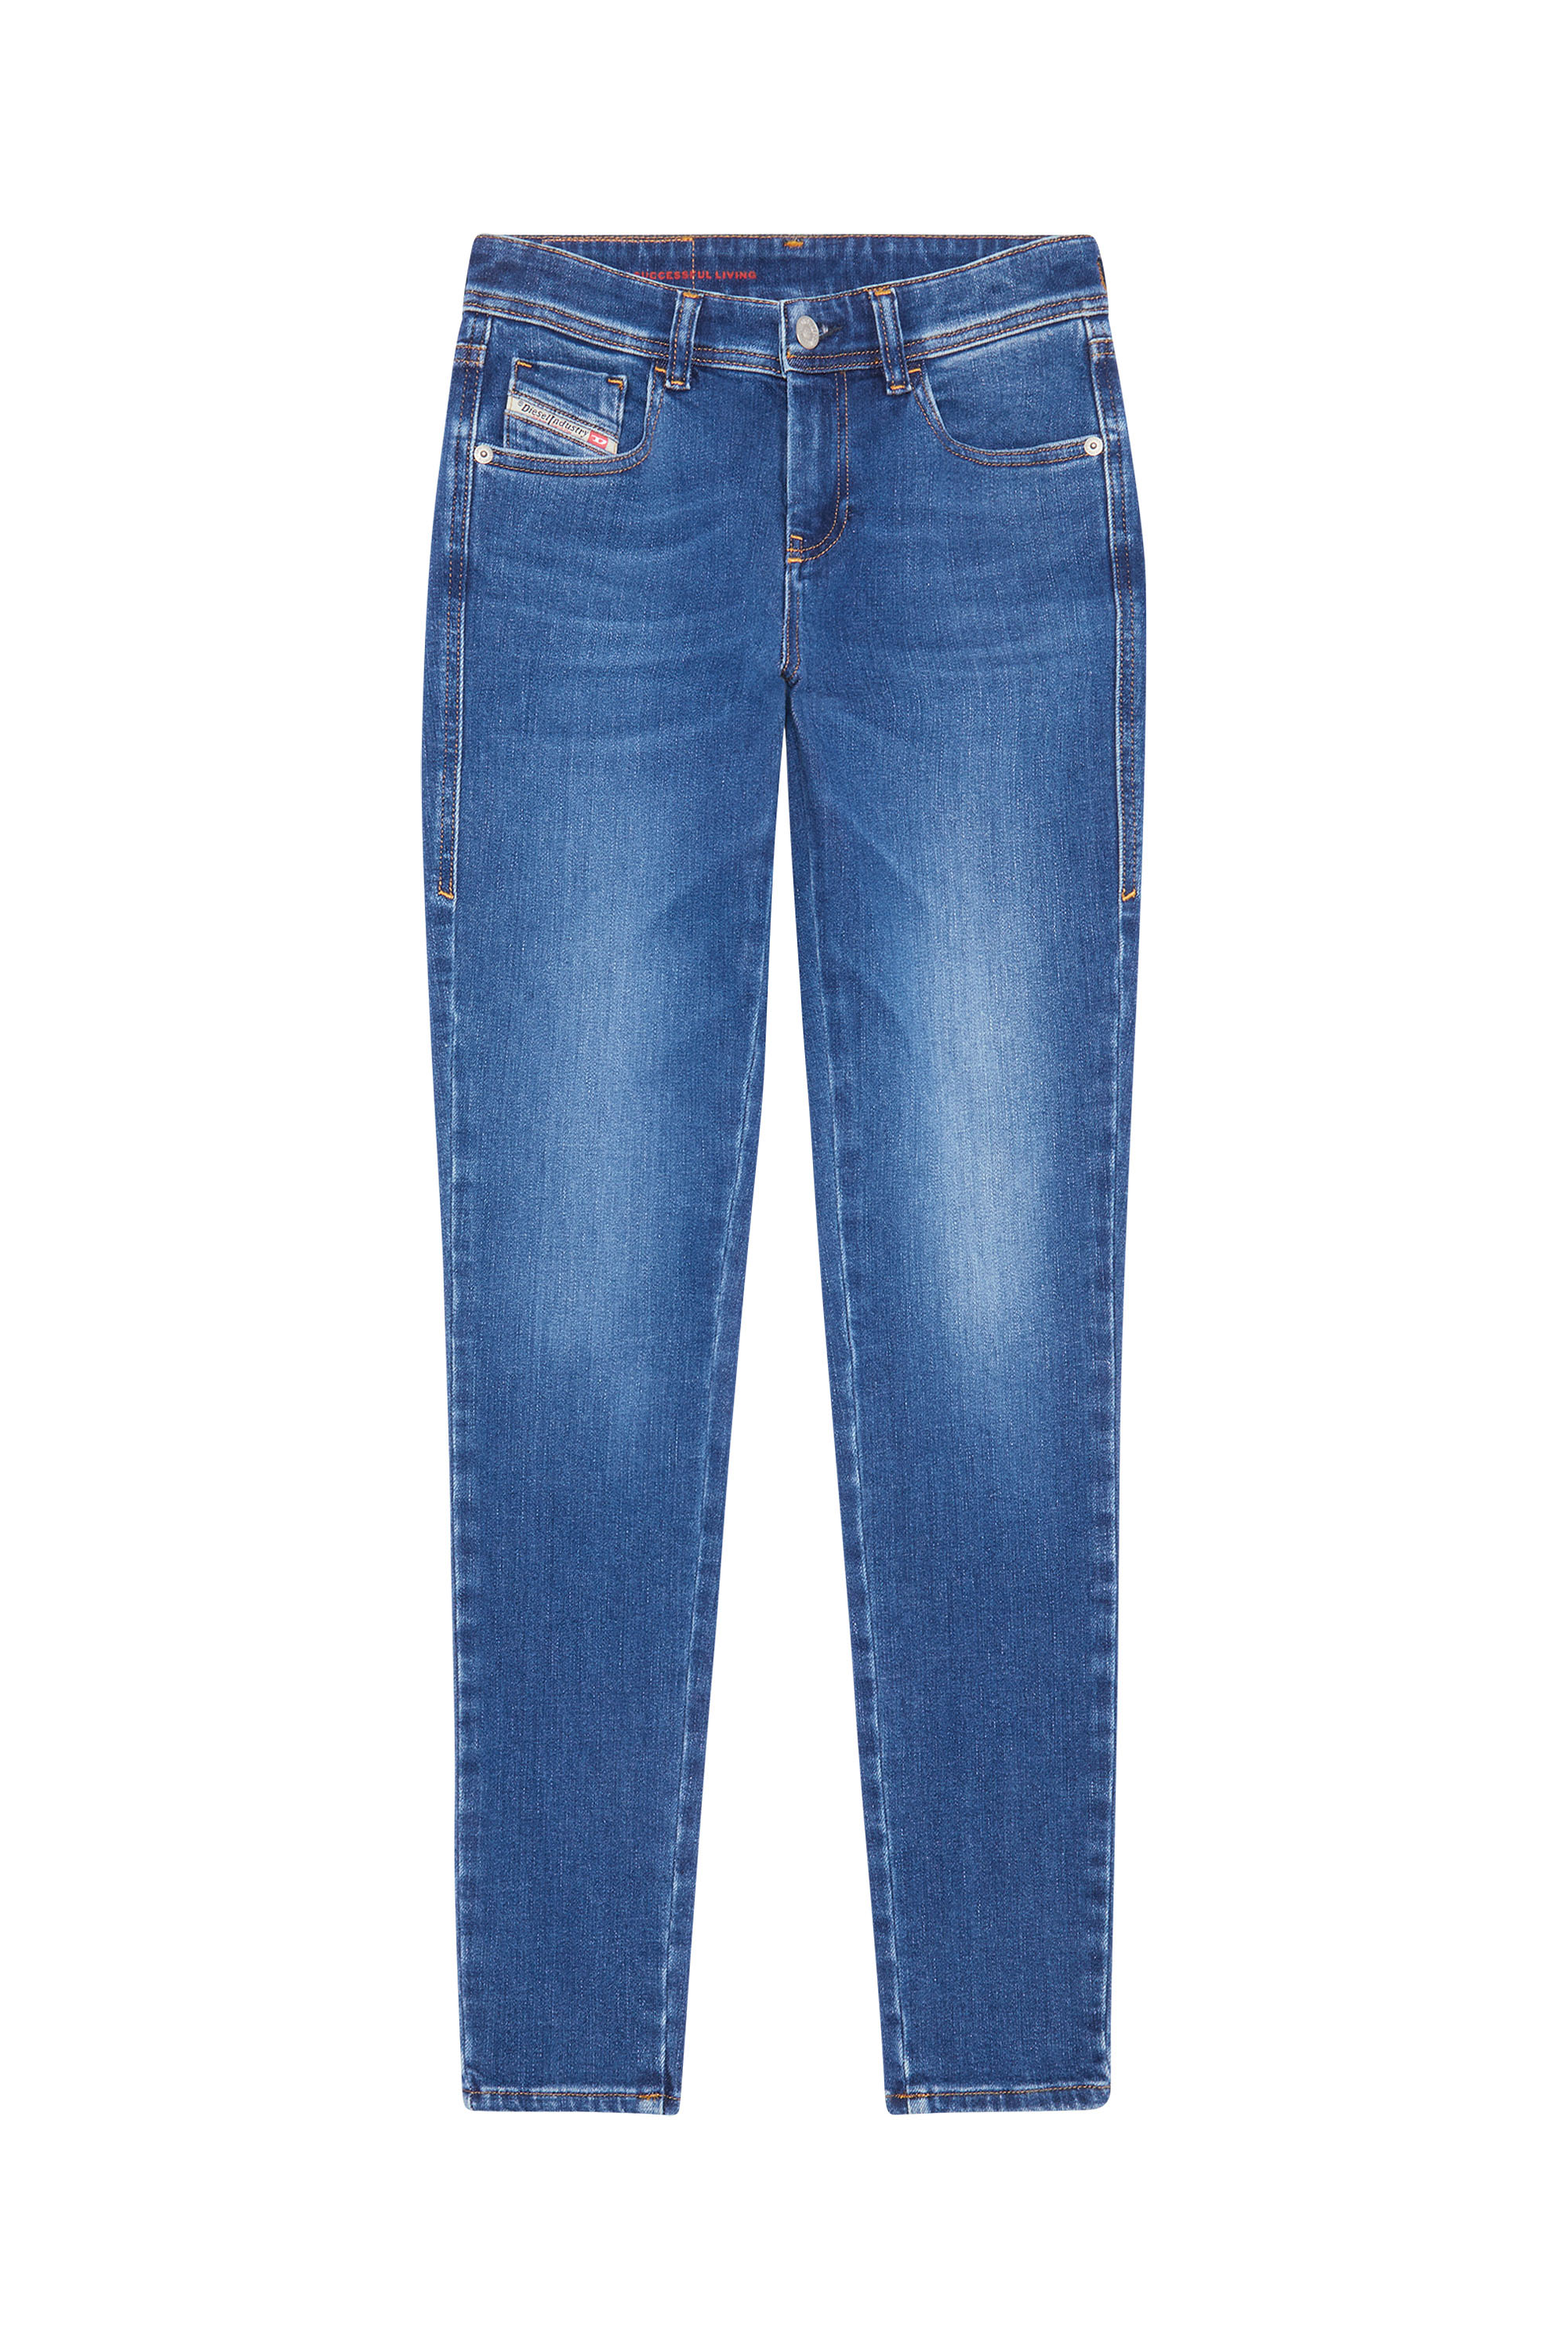 2017 SLANDY 09C21 Super skinny Jeans, Medium blue - Jeans